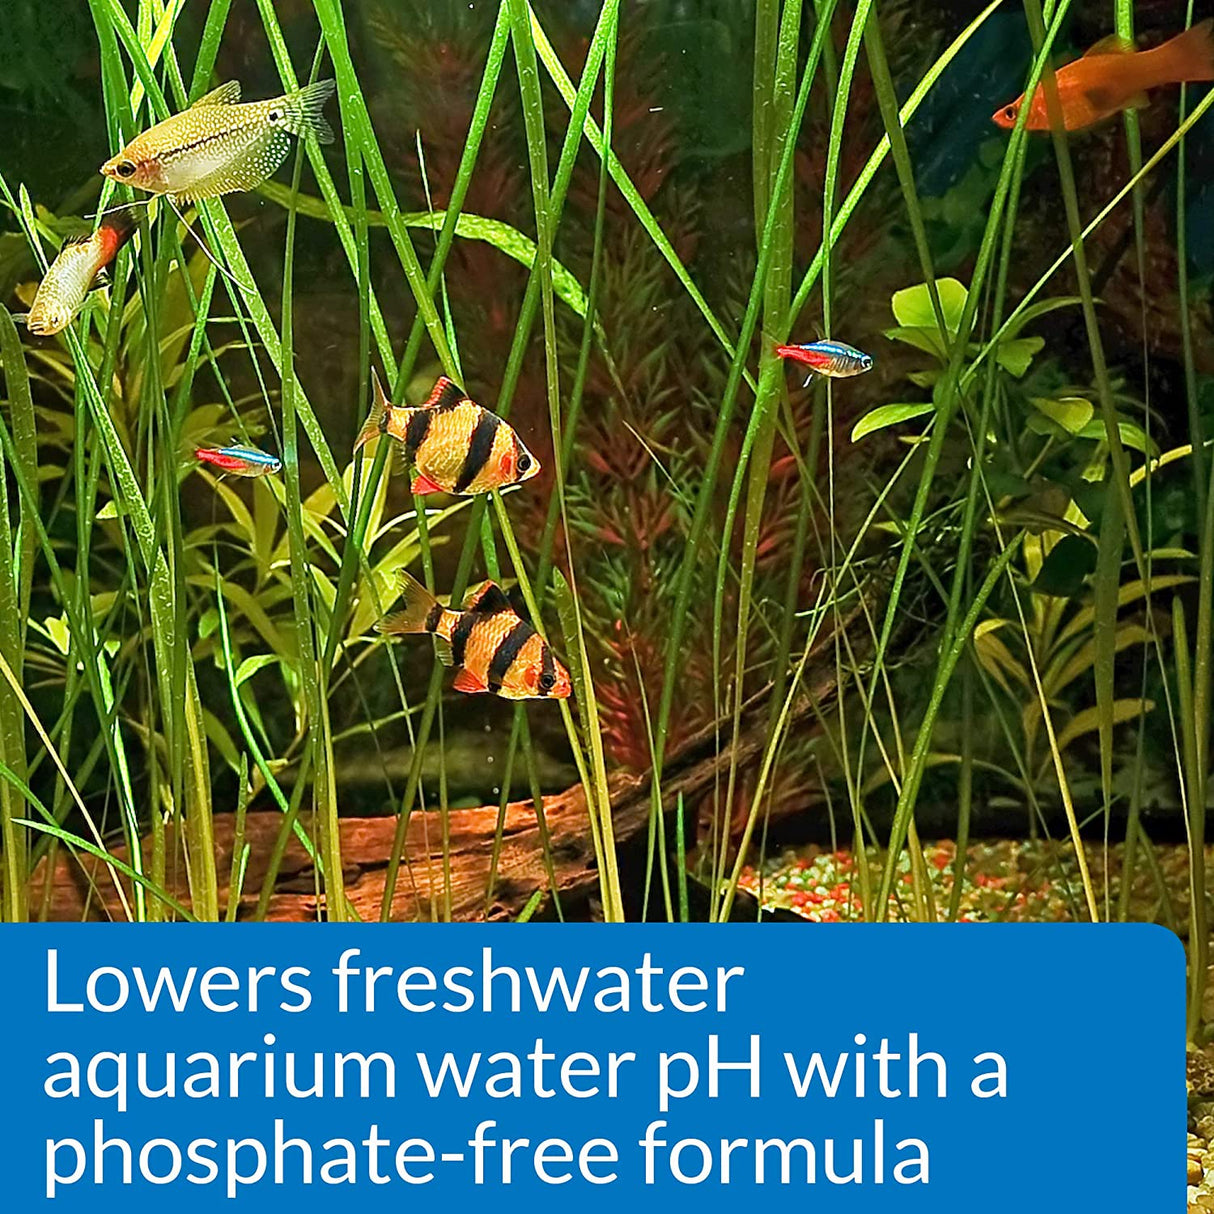 API pH Down Lowers Aquarium pH for Freshwater Aquariums - PetMountain.com